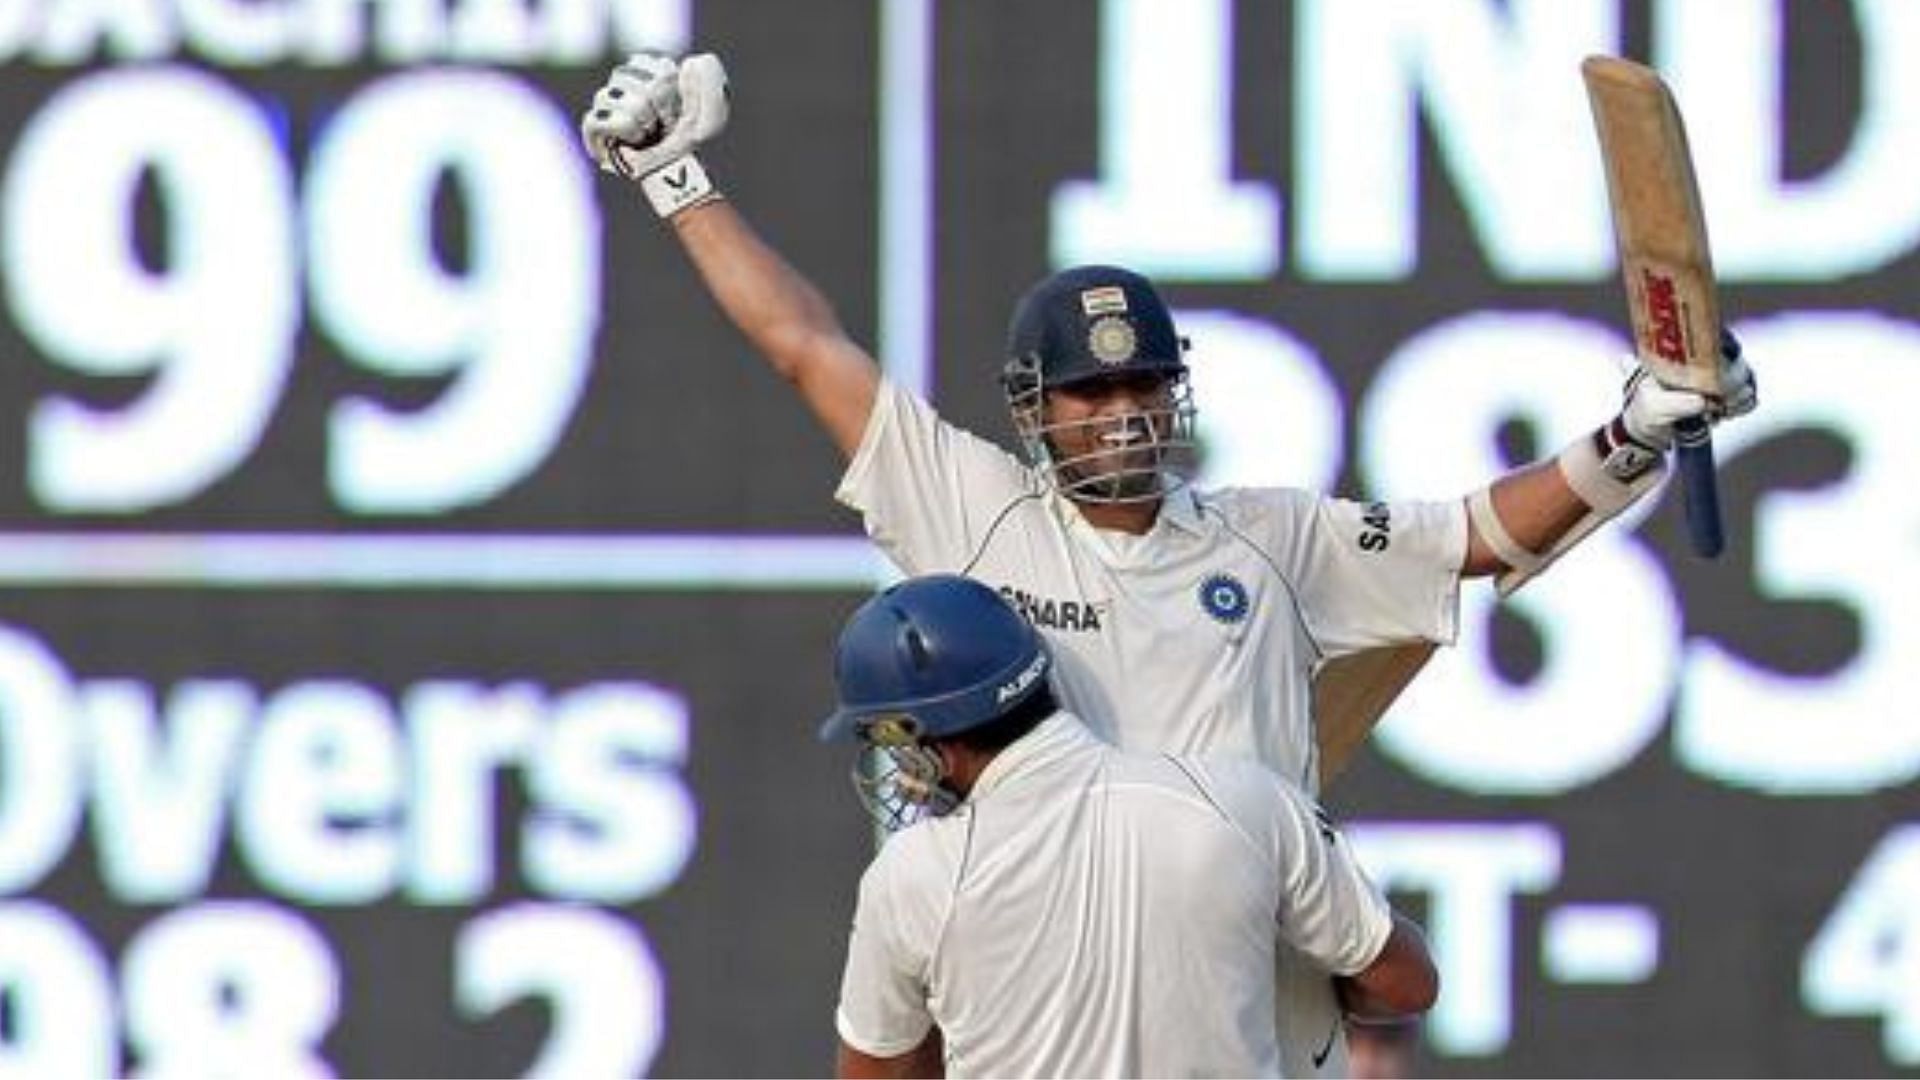 Yuvraj Singh lifts Sachin Tendulkar in his arms after the latter hit the winning runs in the Chennai Test